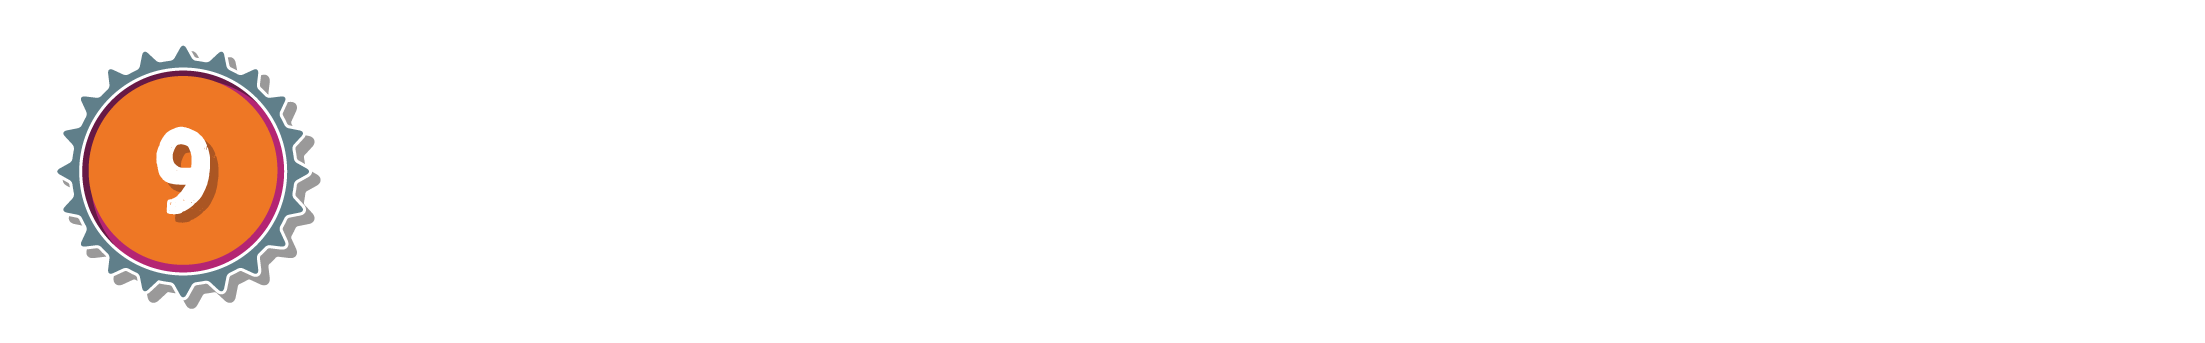 brewer listing-09